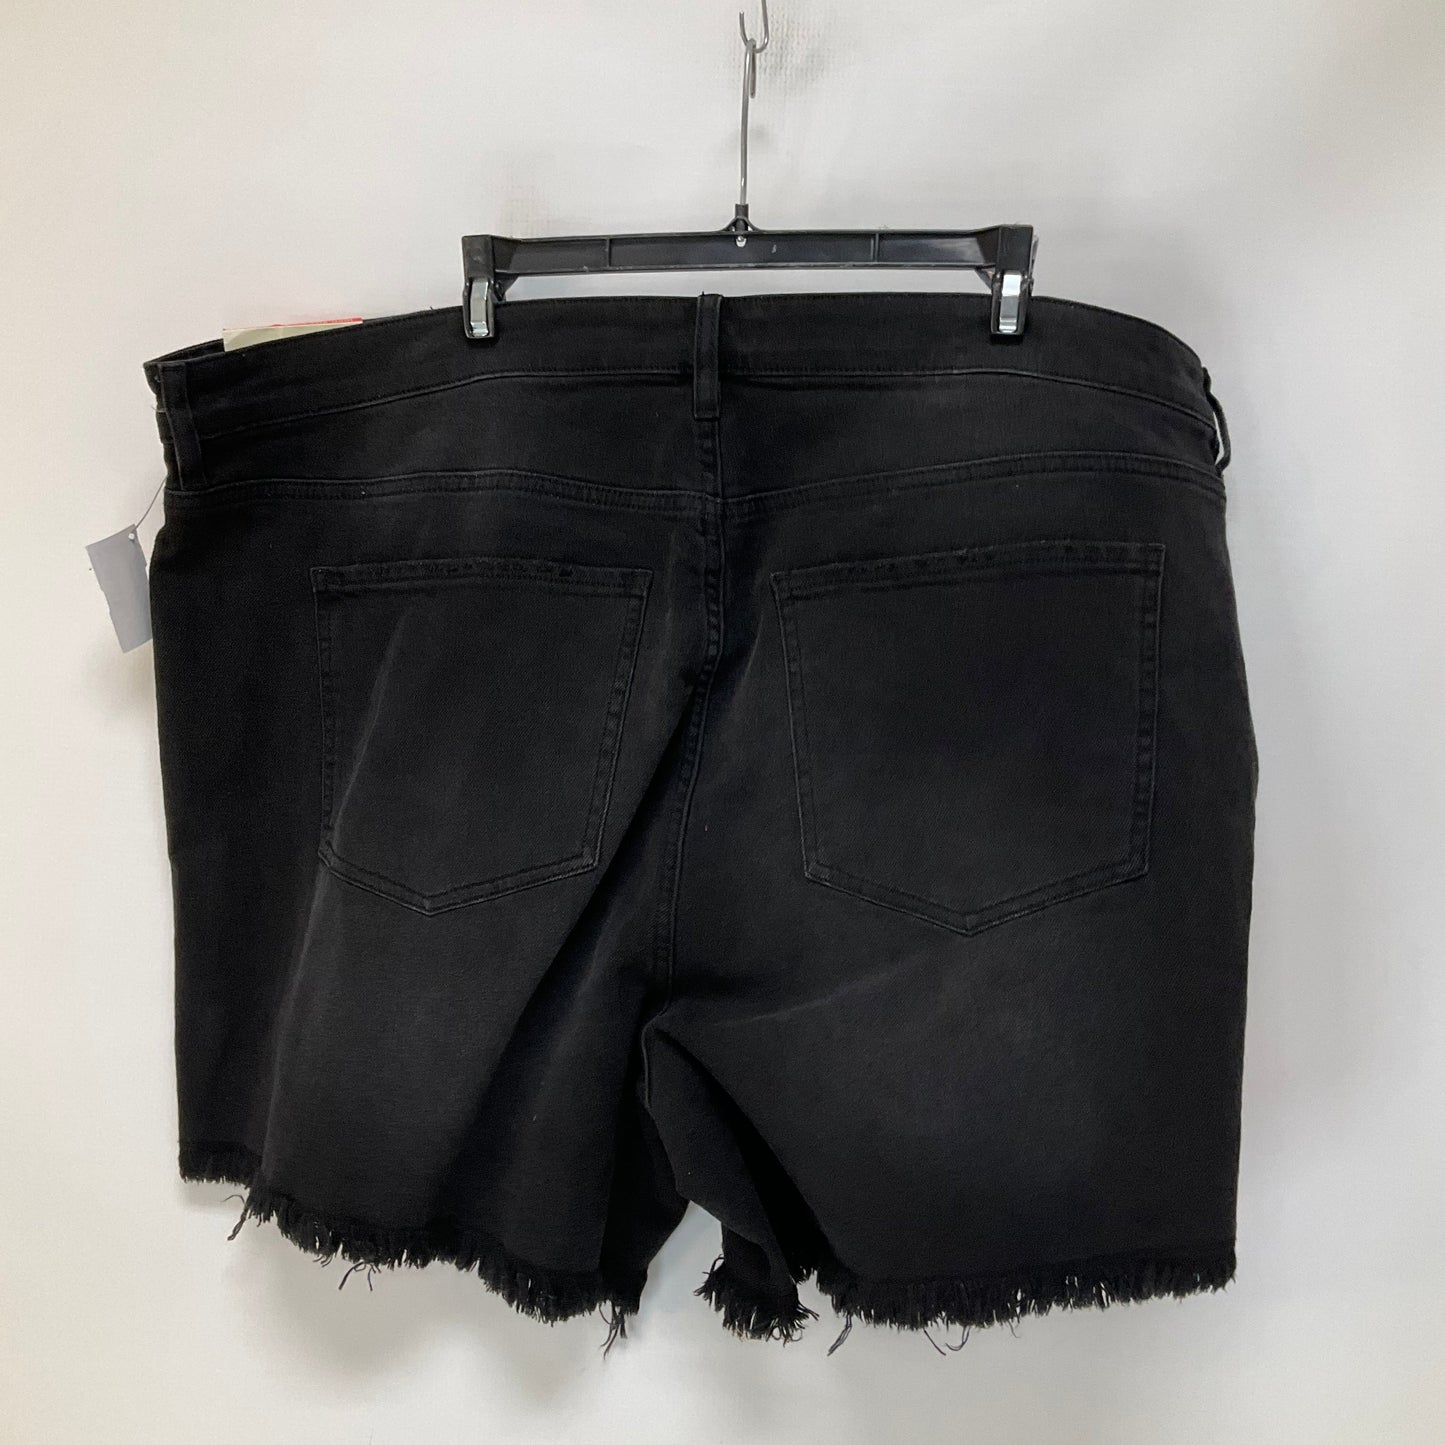 Black Denim Shorts Cmc, Size 24